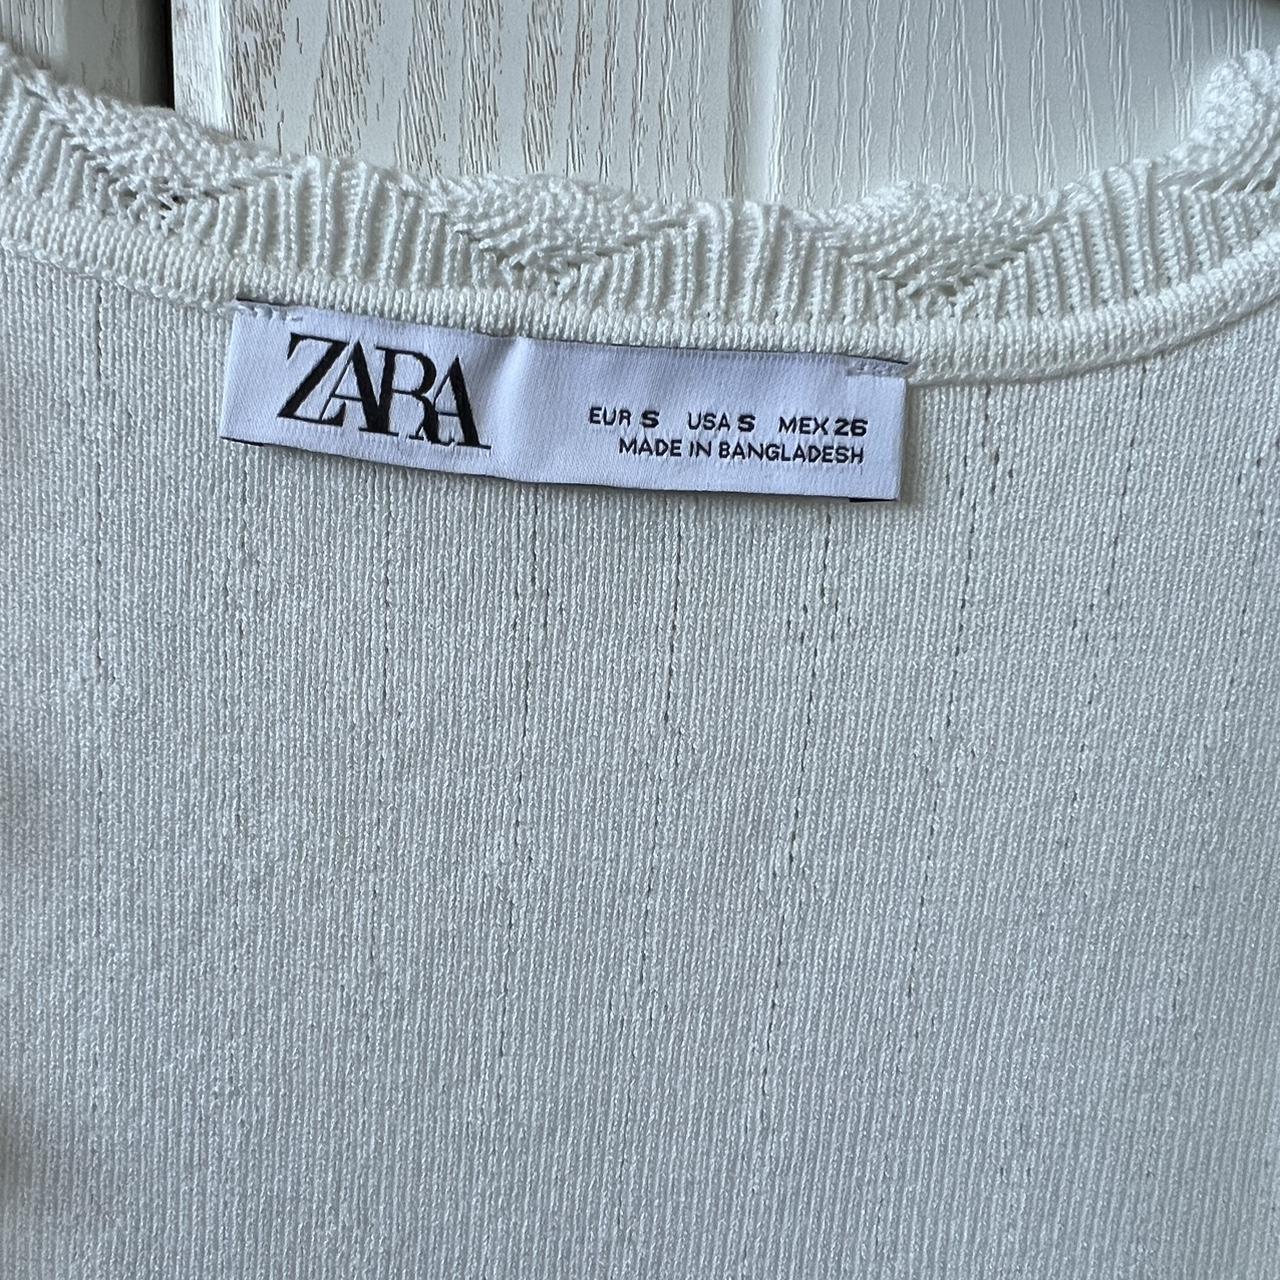 Zara white pointelle knit vest top Size S Brand new... - Depop